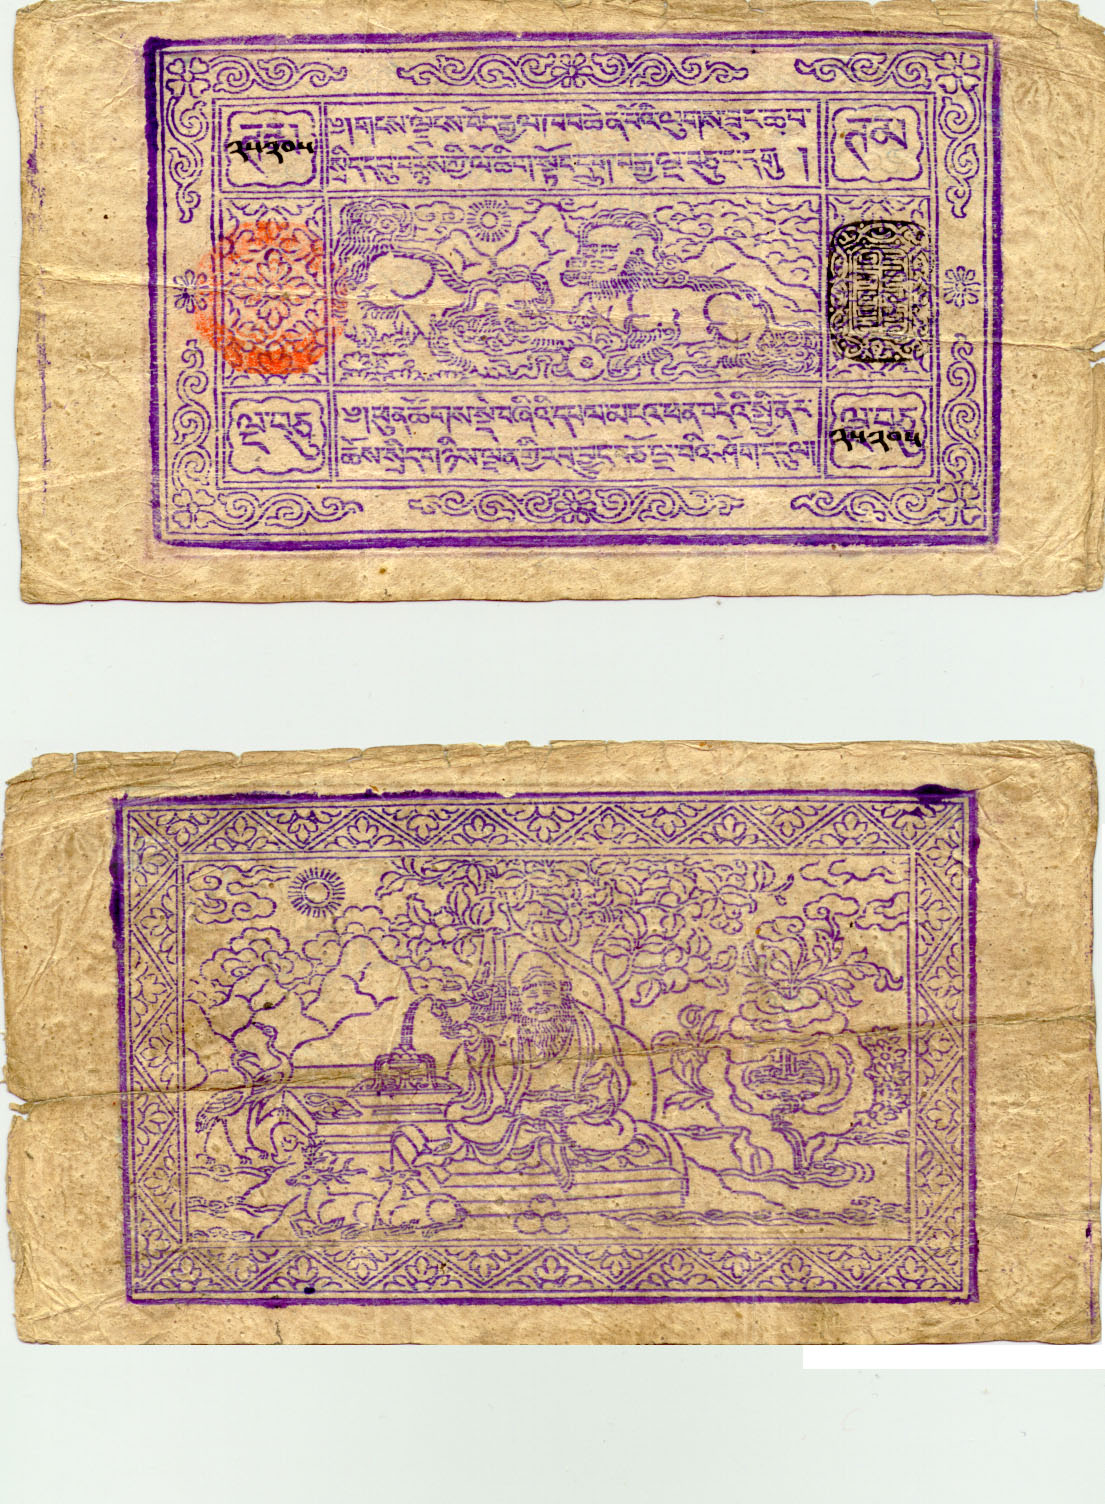 Billet de banque de 50 TAM (année 1913 env)